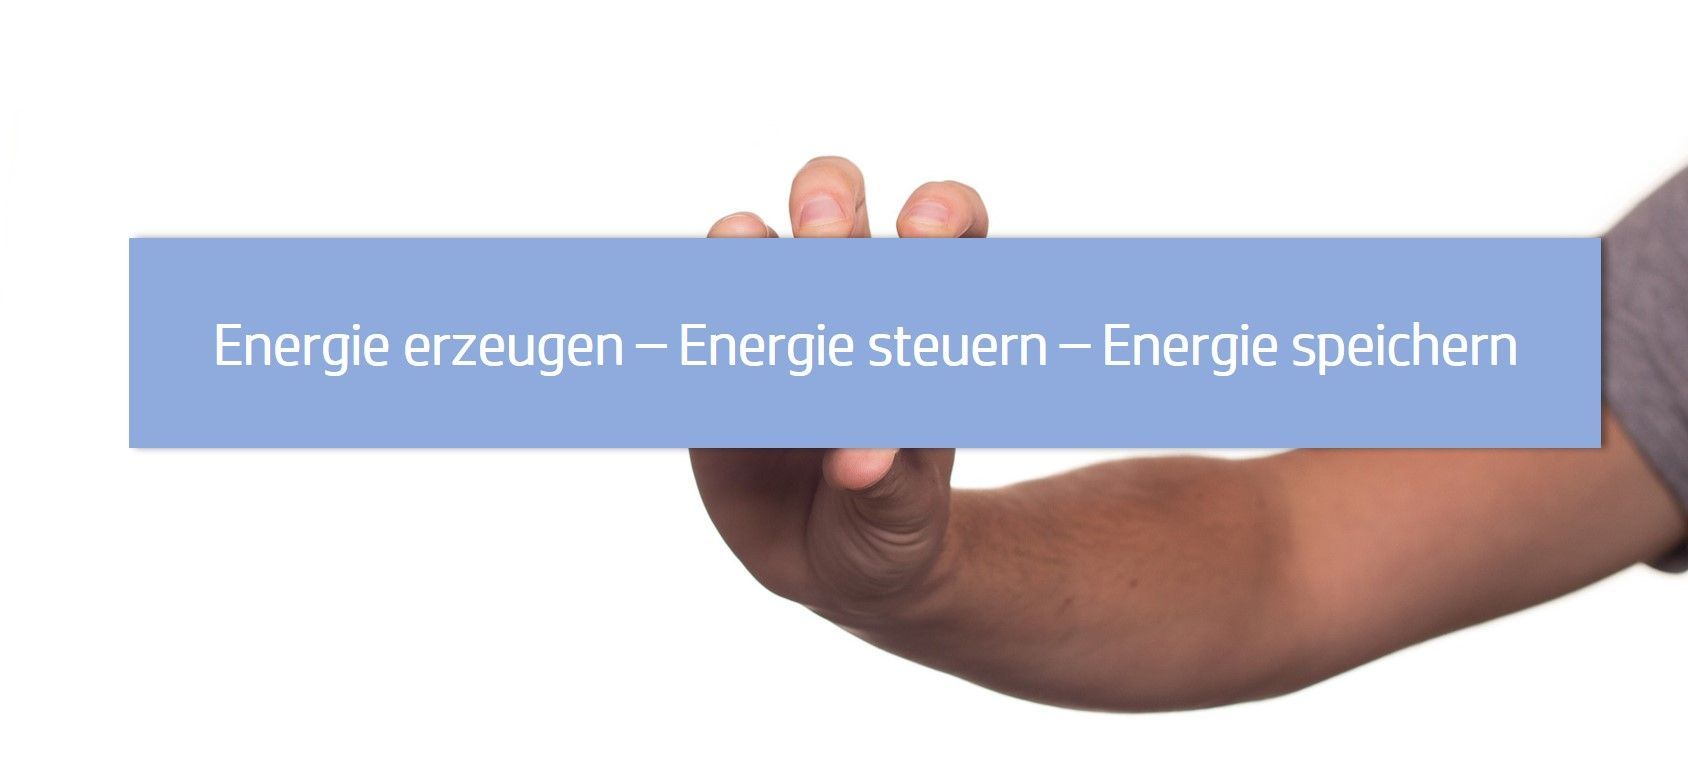 Warum Energie managen? | Baumgartner FullEnergy